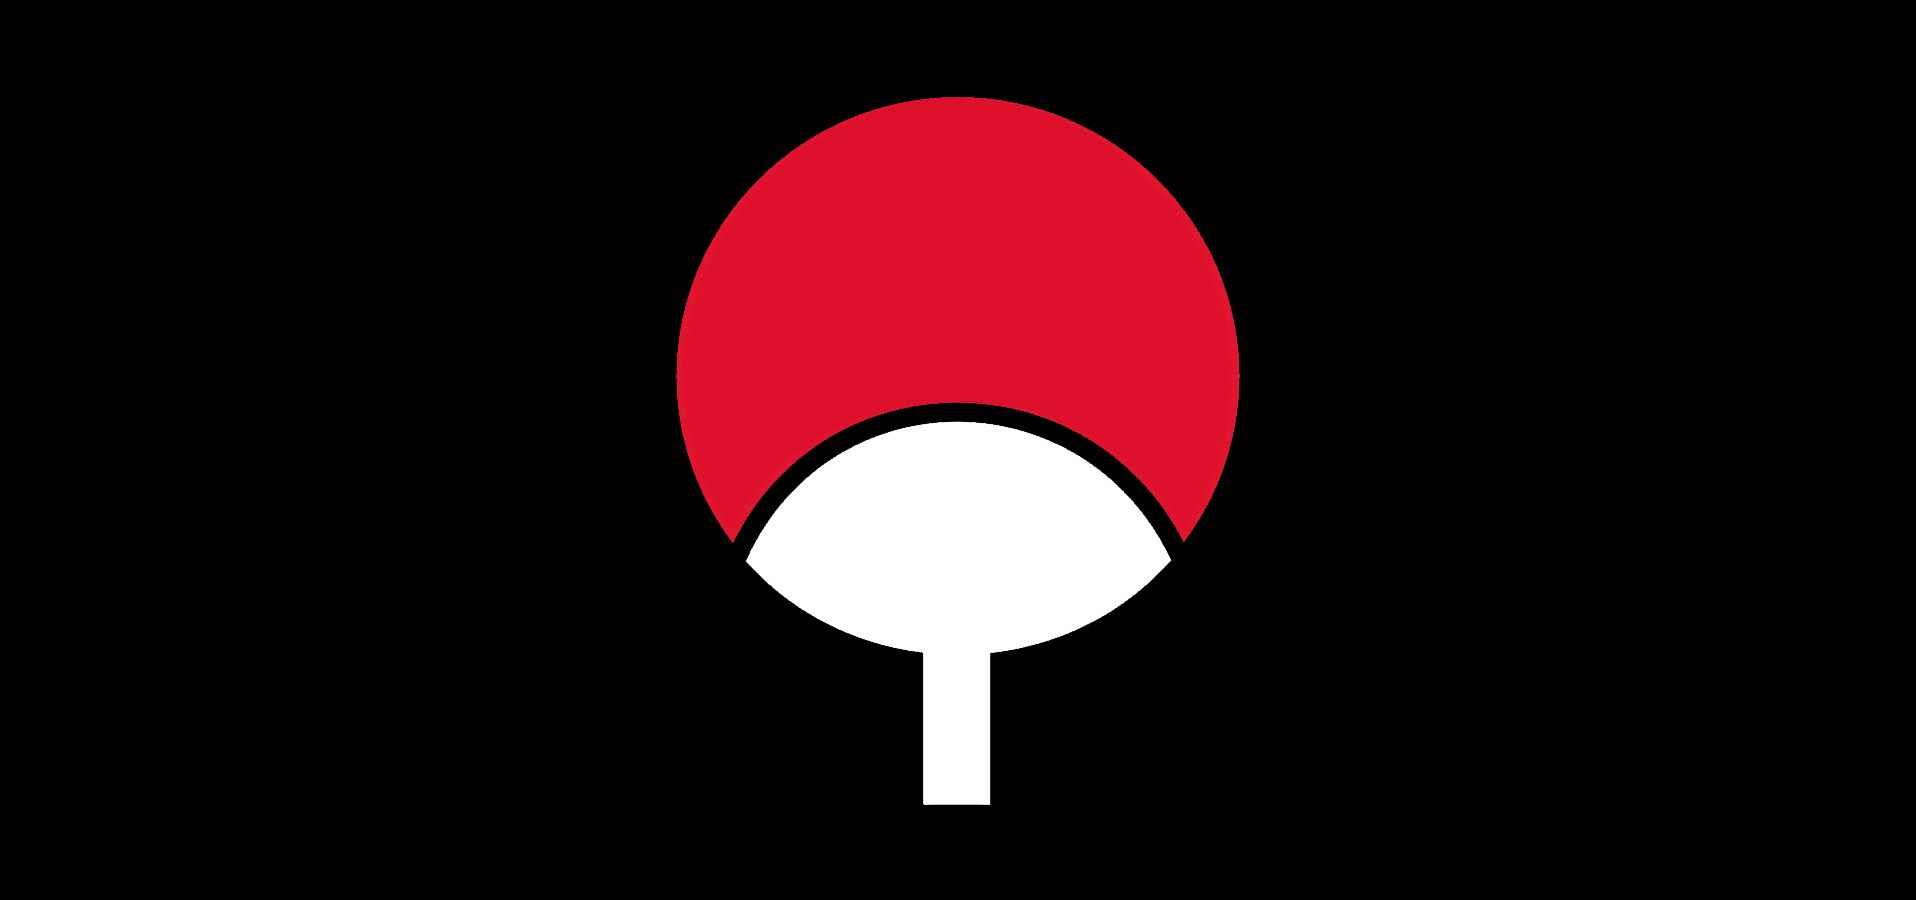 uchiha symbol wallpaper,red,graphic design,illustration,circle,logo